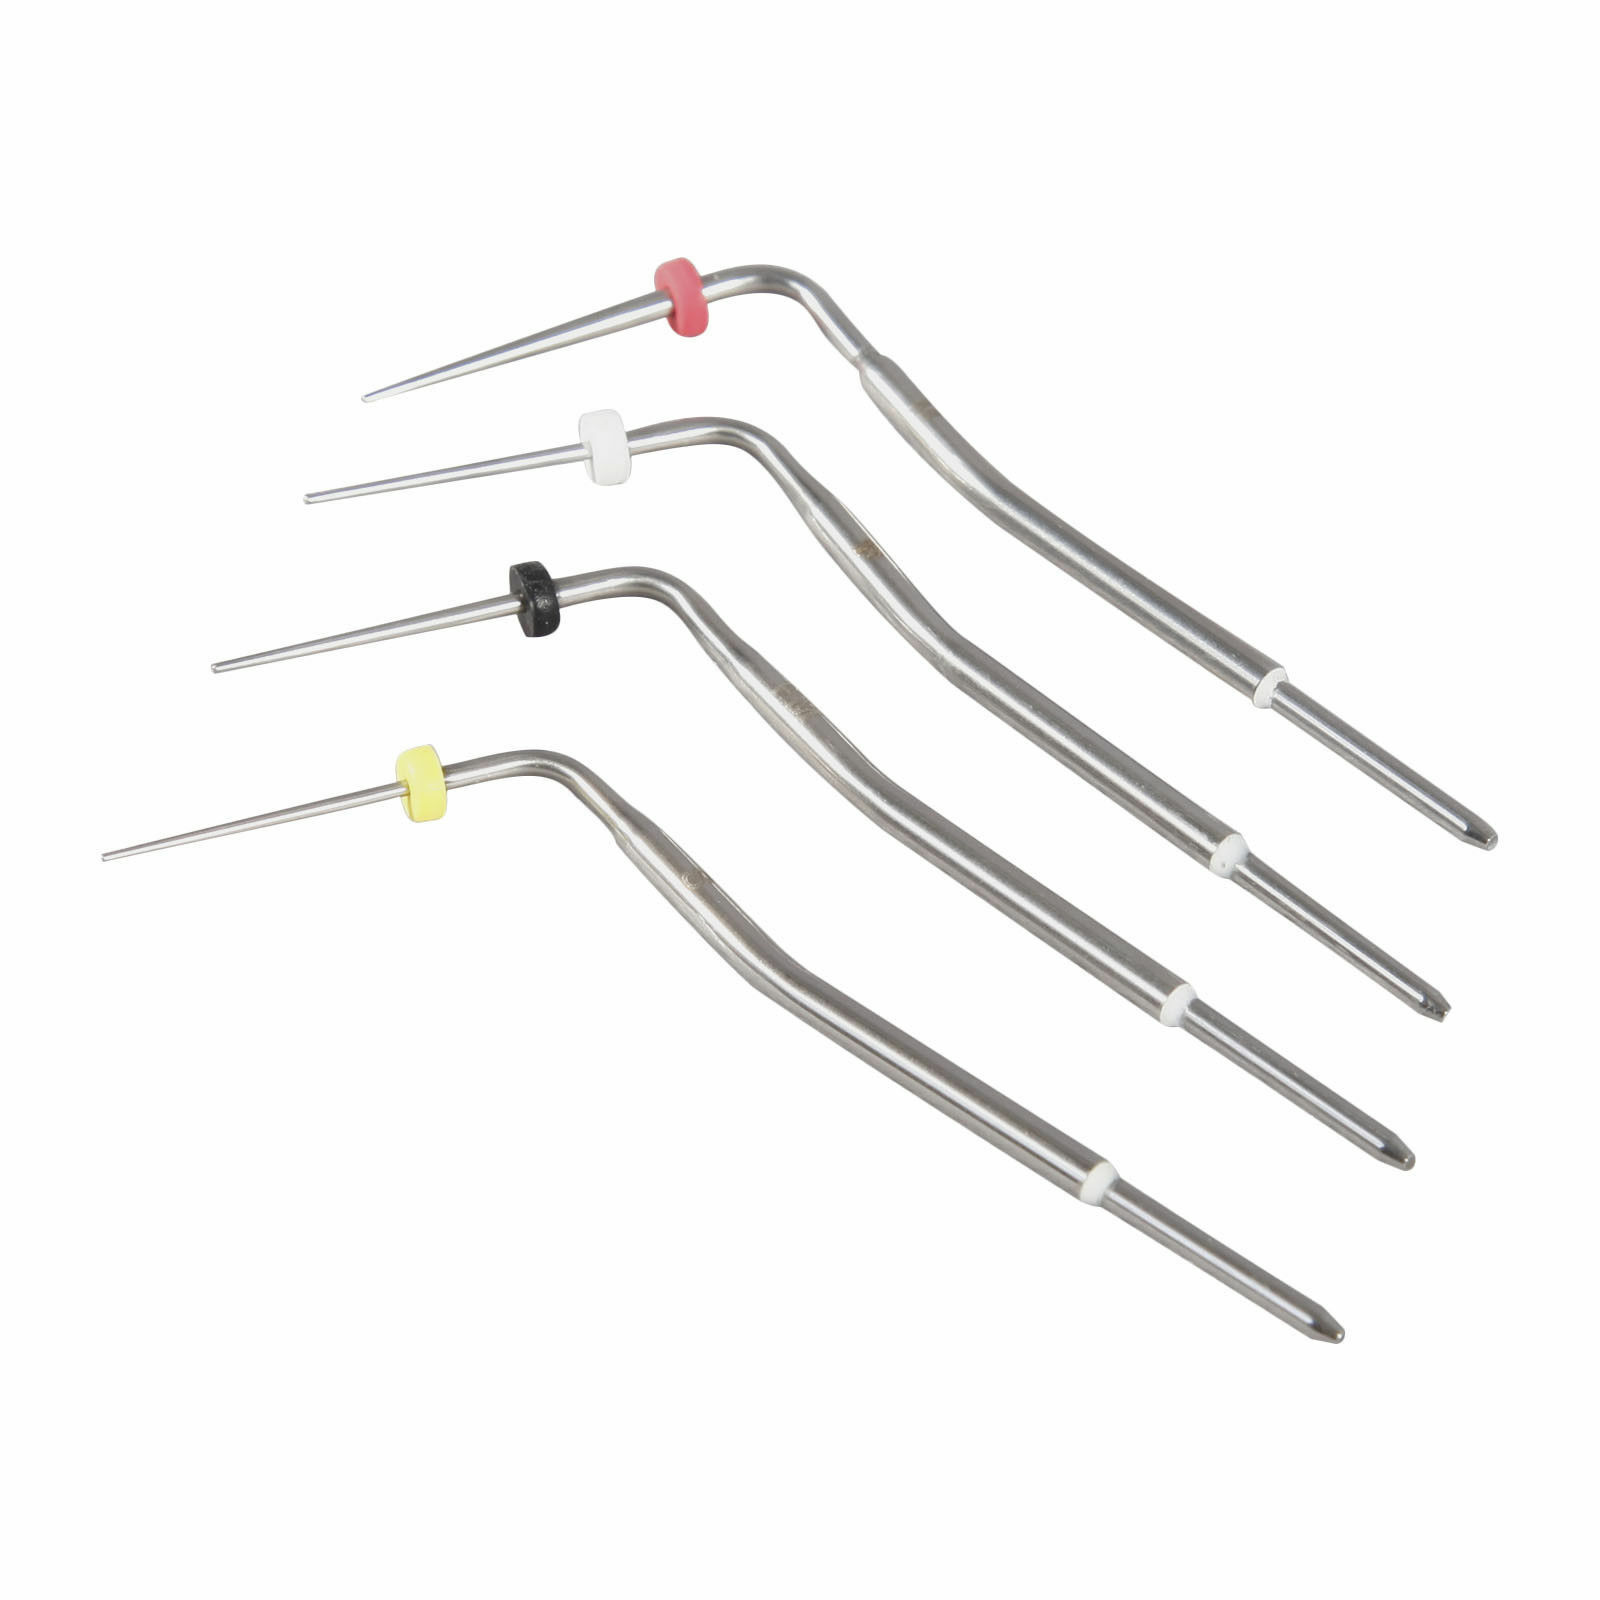 Dental Gutta Percha Pen Heated Tips Plugger Needles for Endo Obturation System